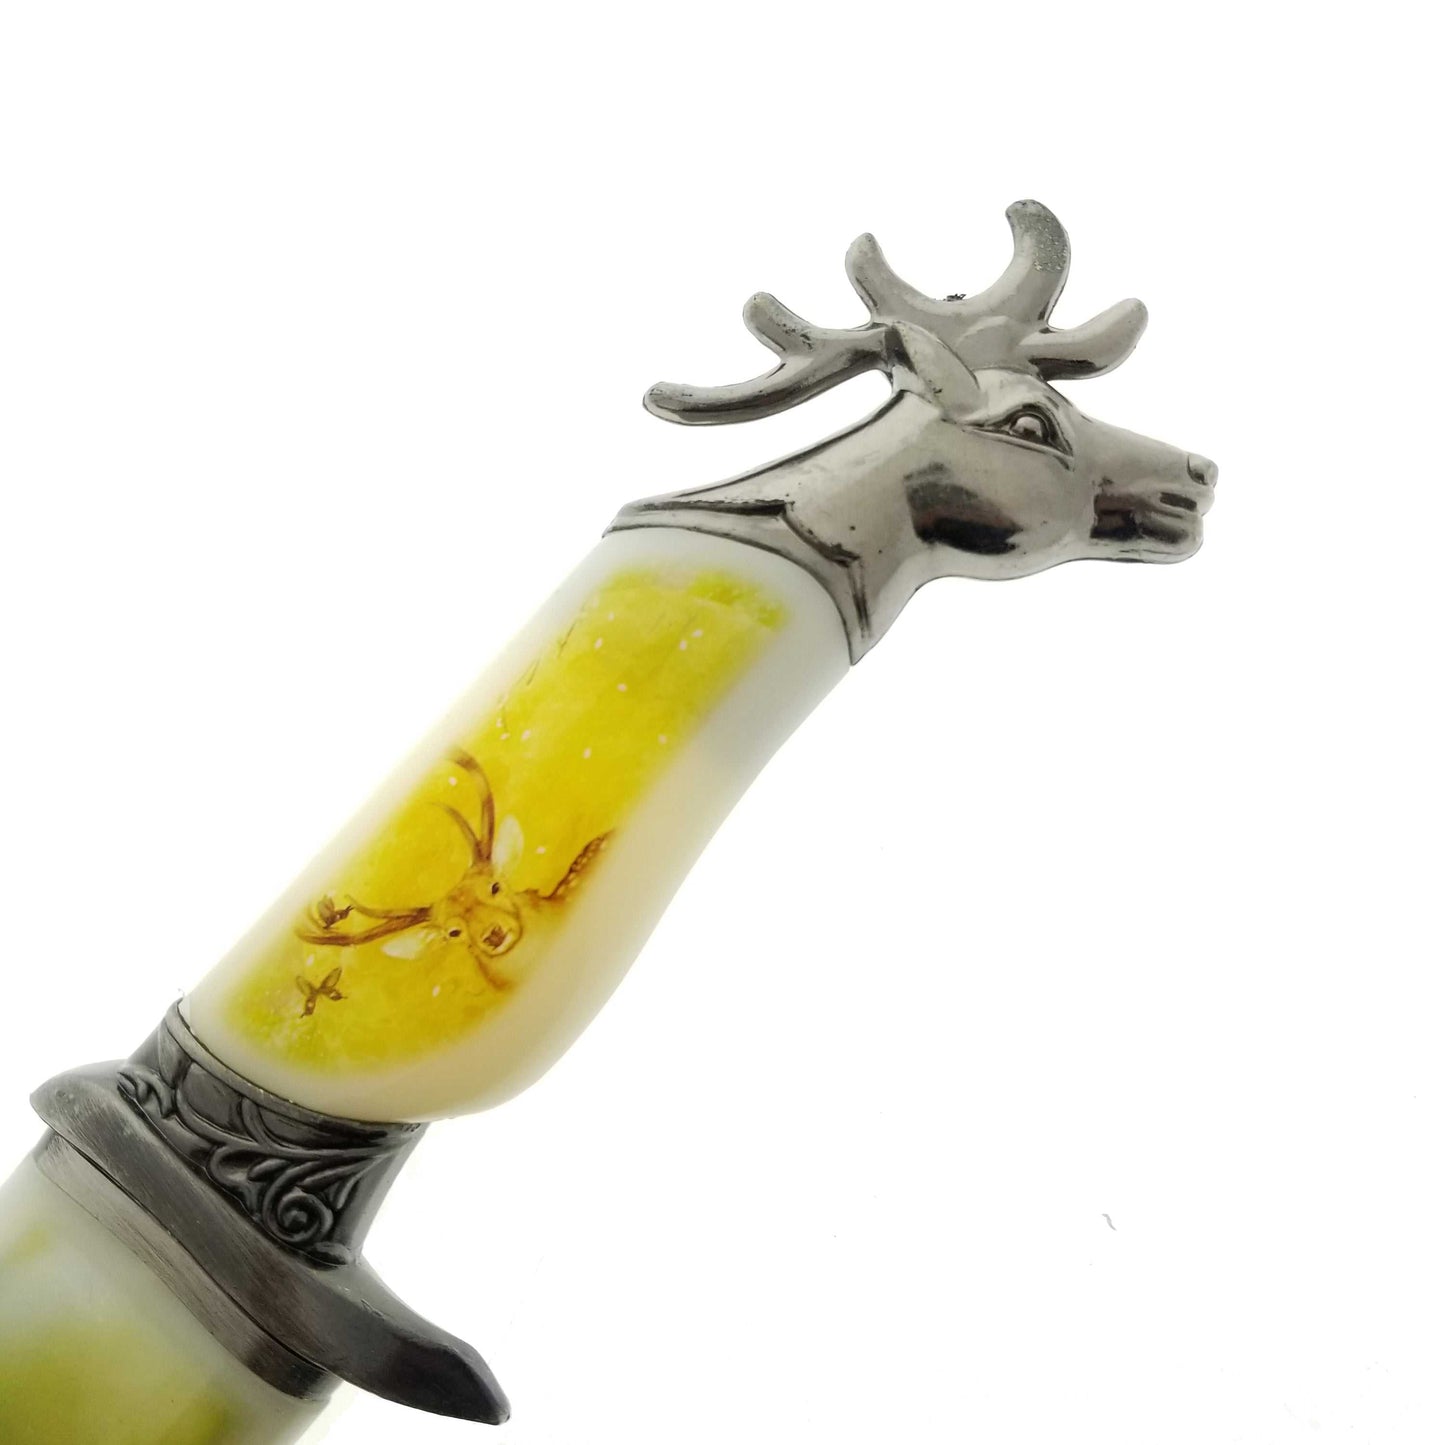 13 1/2" Elk Fantasy Dagger with White Scabbard Dagger All Knives PacificSolution 9